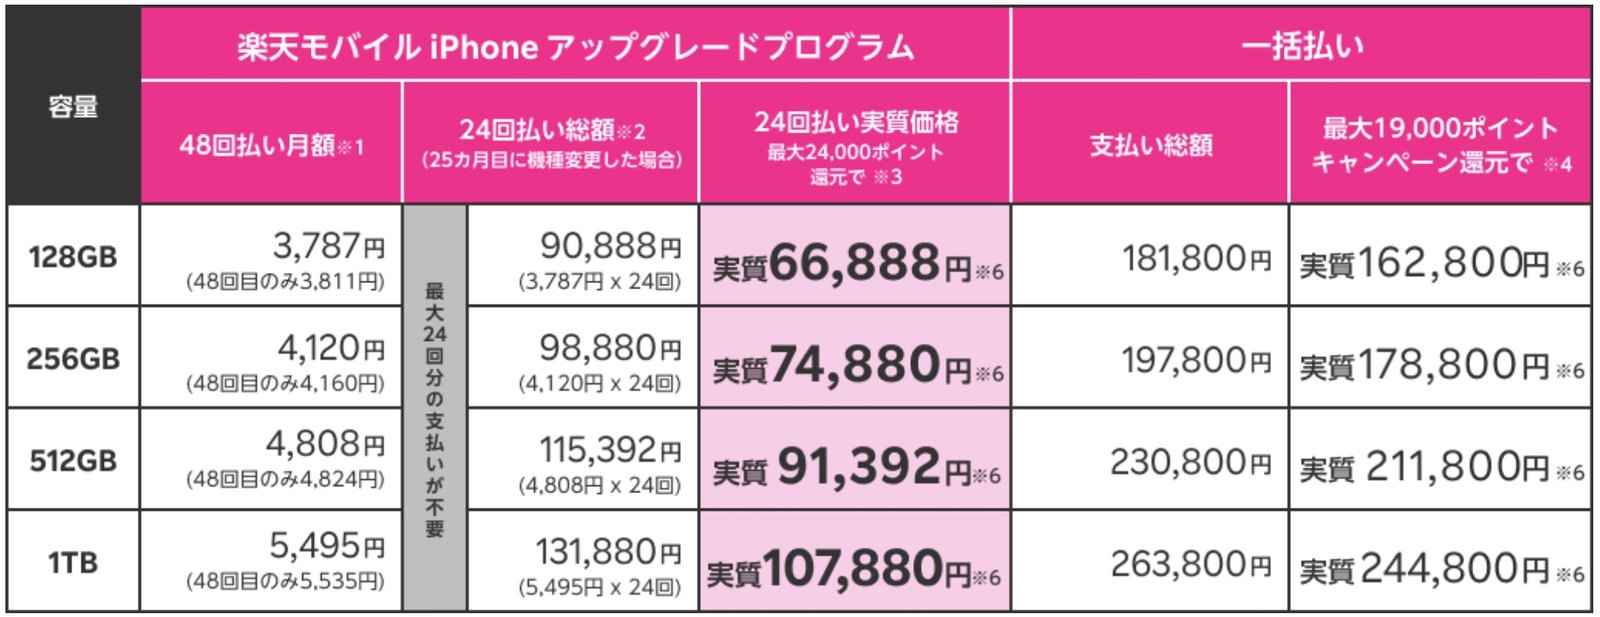 IPhone 14 series pricing for RakutenMobile 01